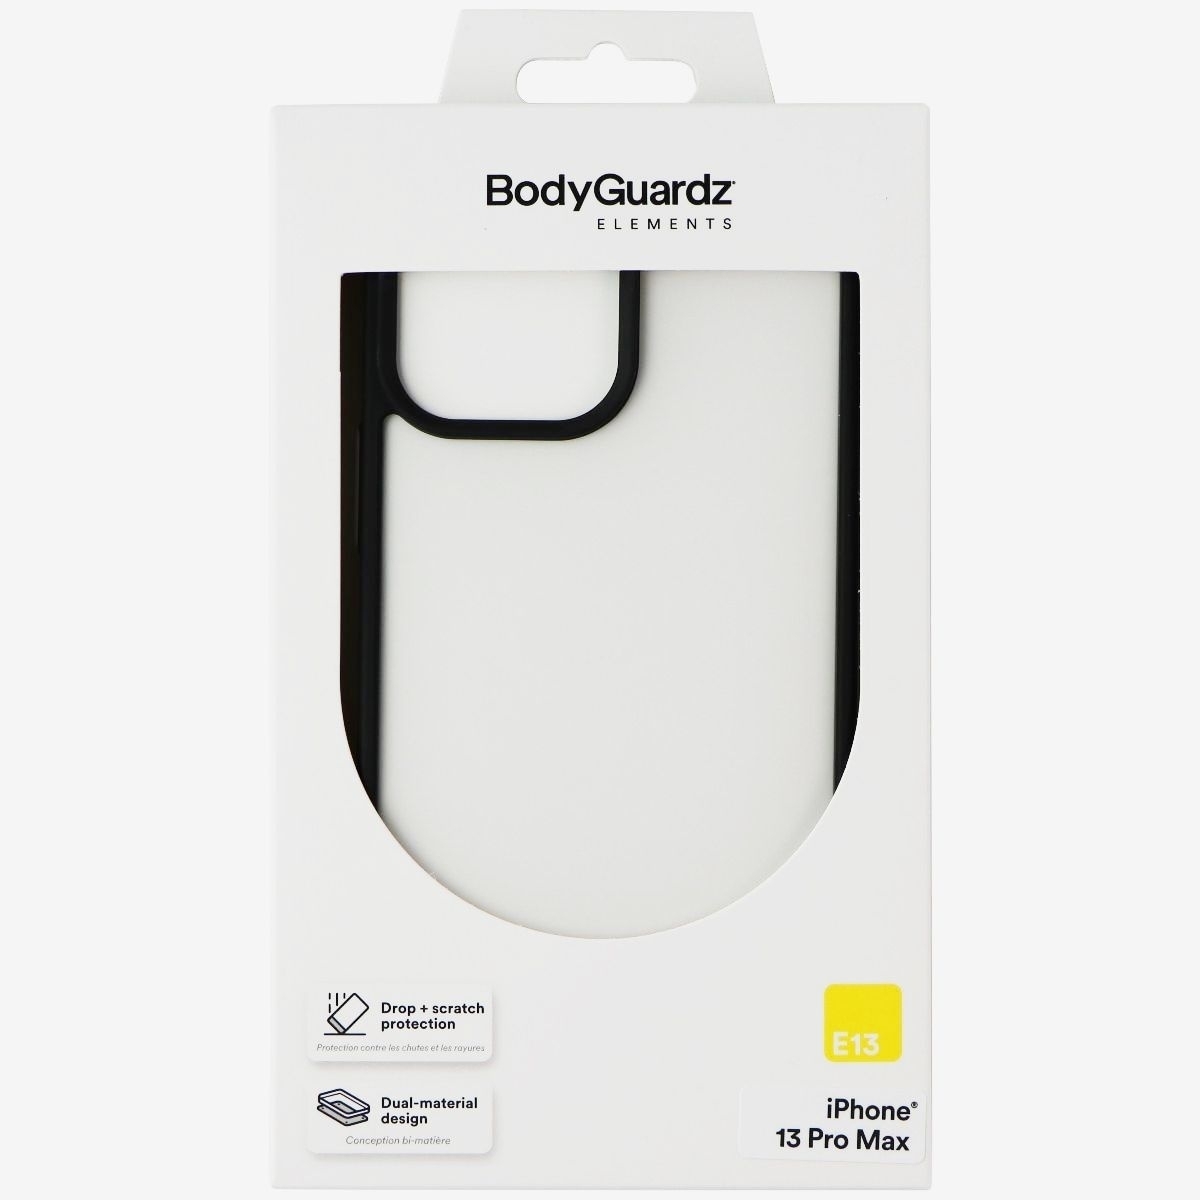 BodyGuardz Elements E13 Hard Case For IPhone 13 Pro Max - Black